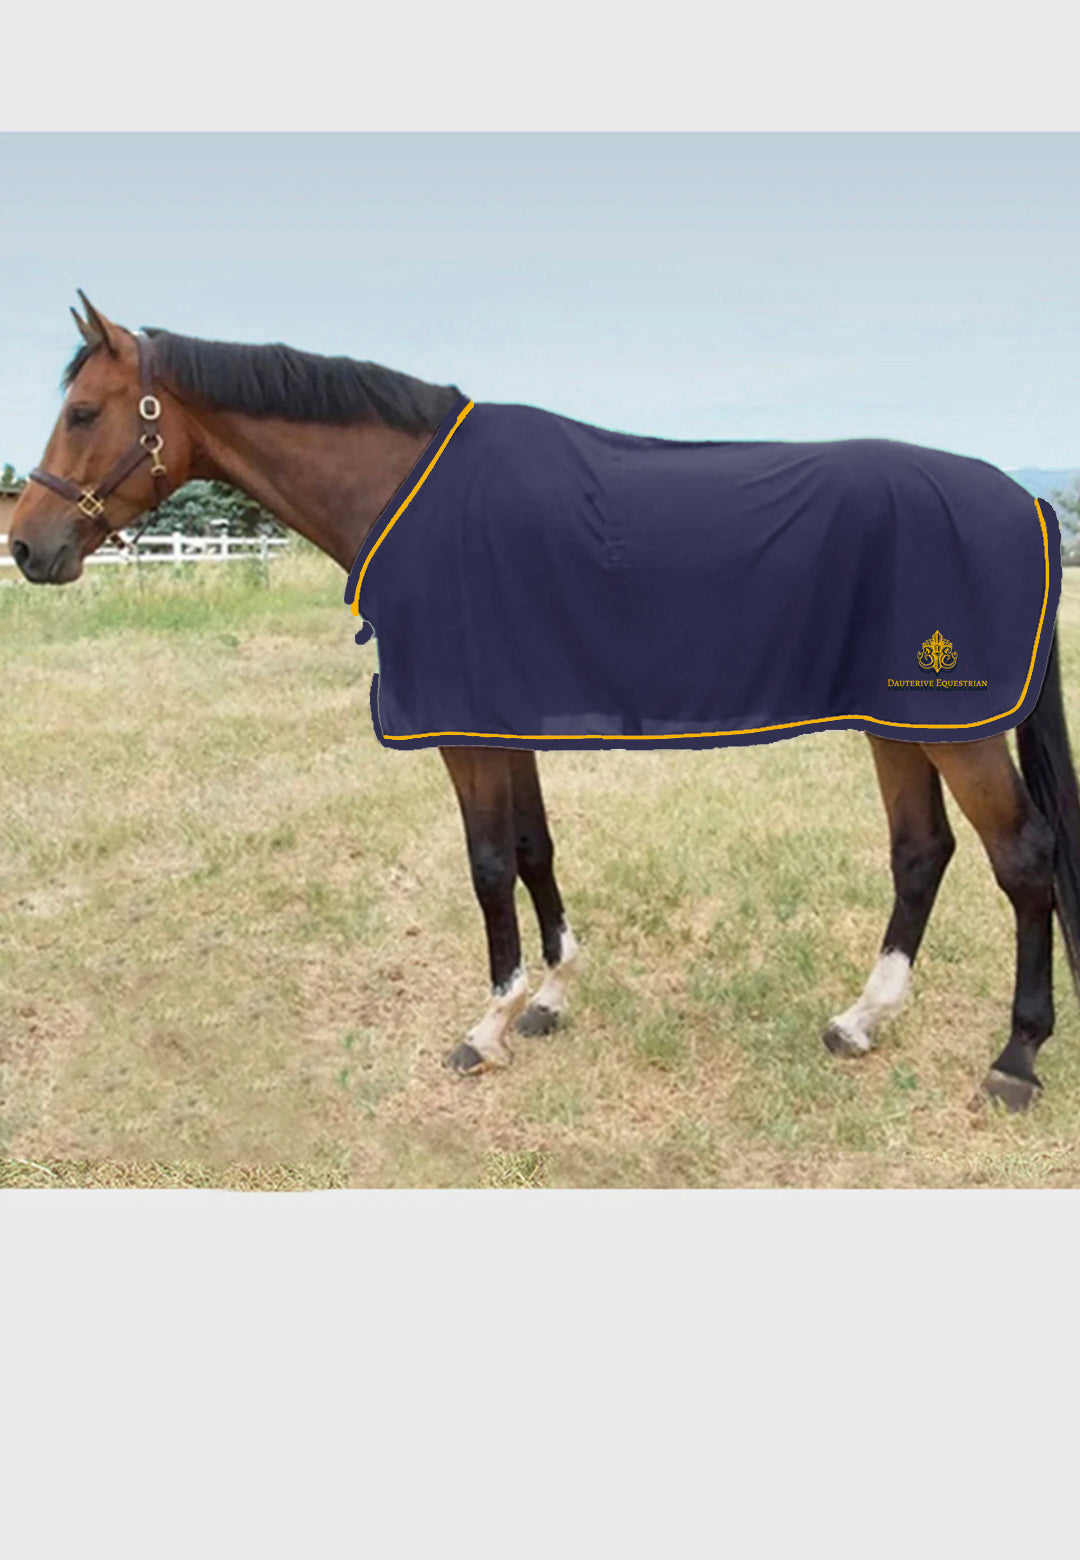 Dauterive Equestrian Jacks Scrim Fly Sheet, Horse + Pony Sizes